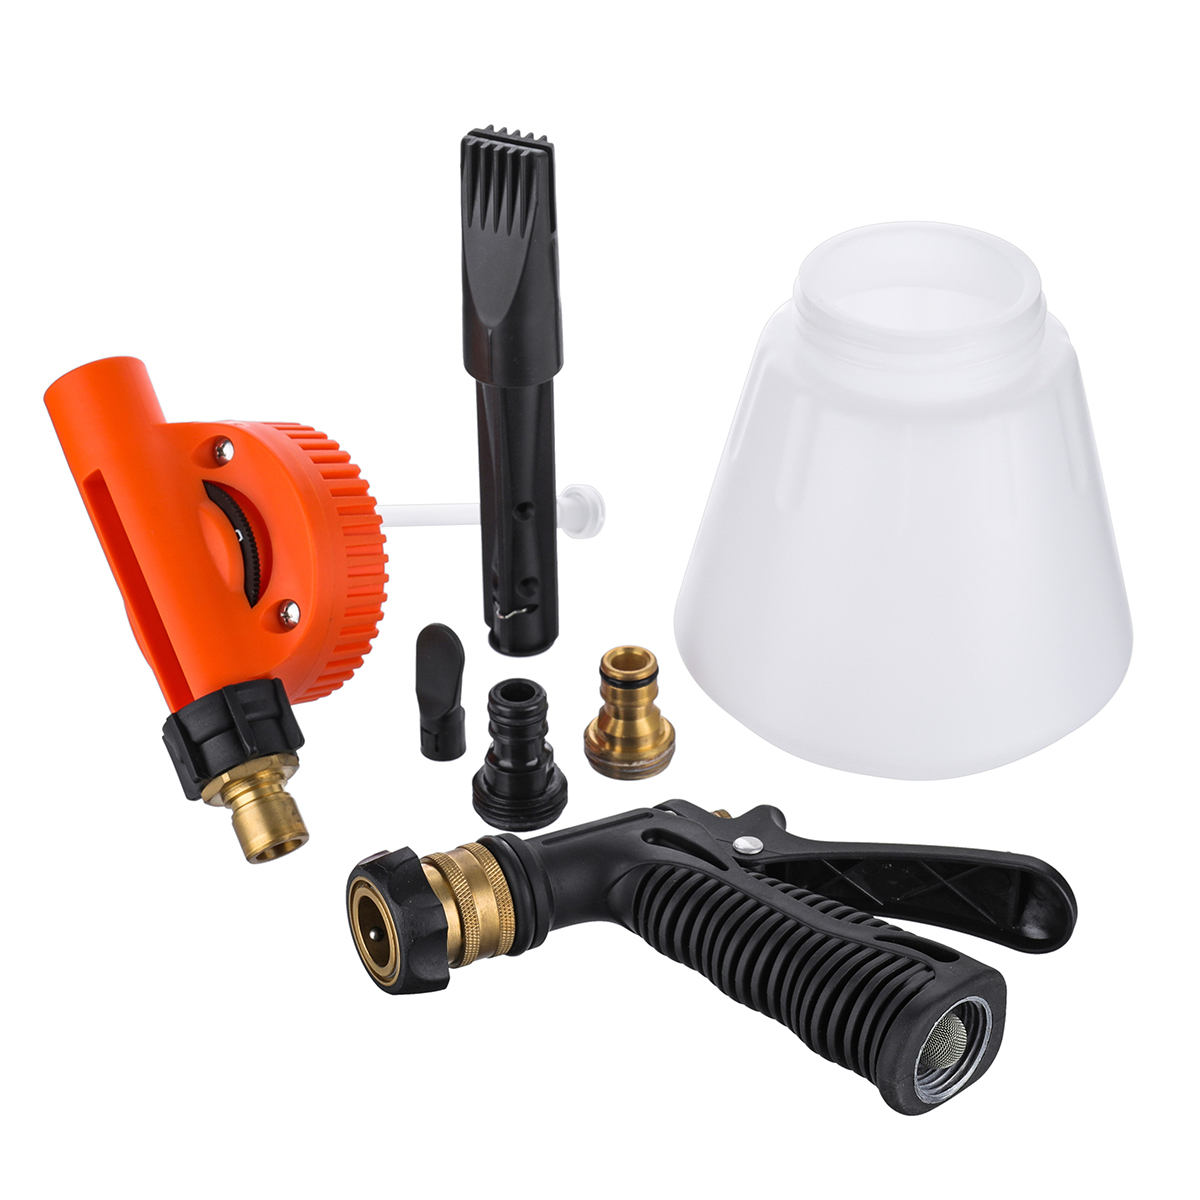 MATCC-Auto-Foam-Car-Wash-Tool-Foam-and-Adjustable-Car-Wash-Sprayer-with-Adjustment-Ratio-Dial-Spraye-1388324-11